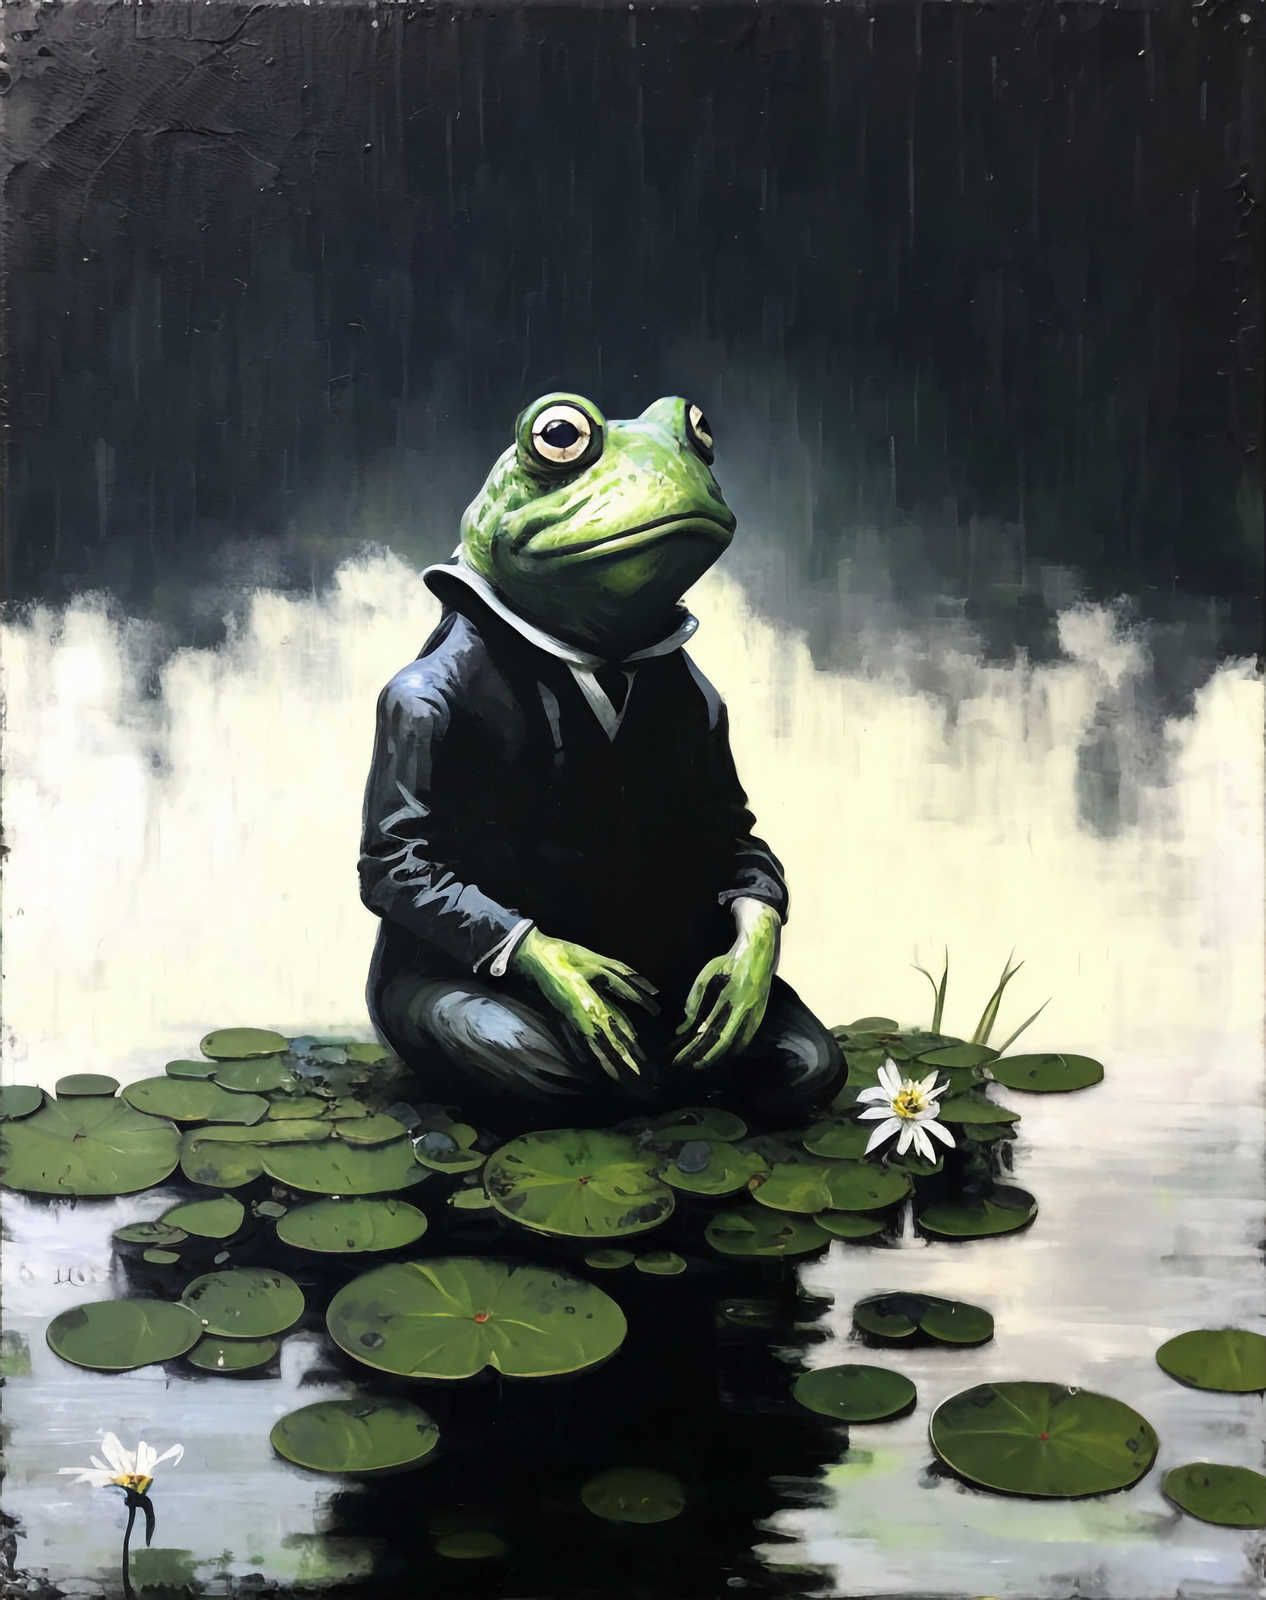             KI Canvas painting »chilling frog« - 60 cm x 90 cm
        